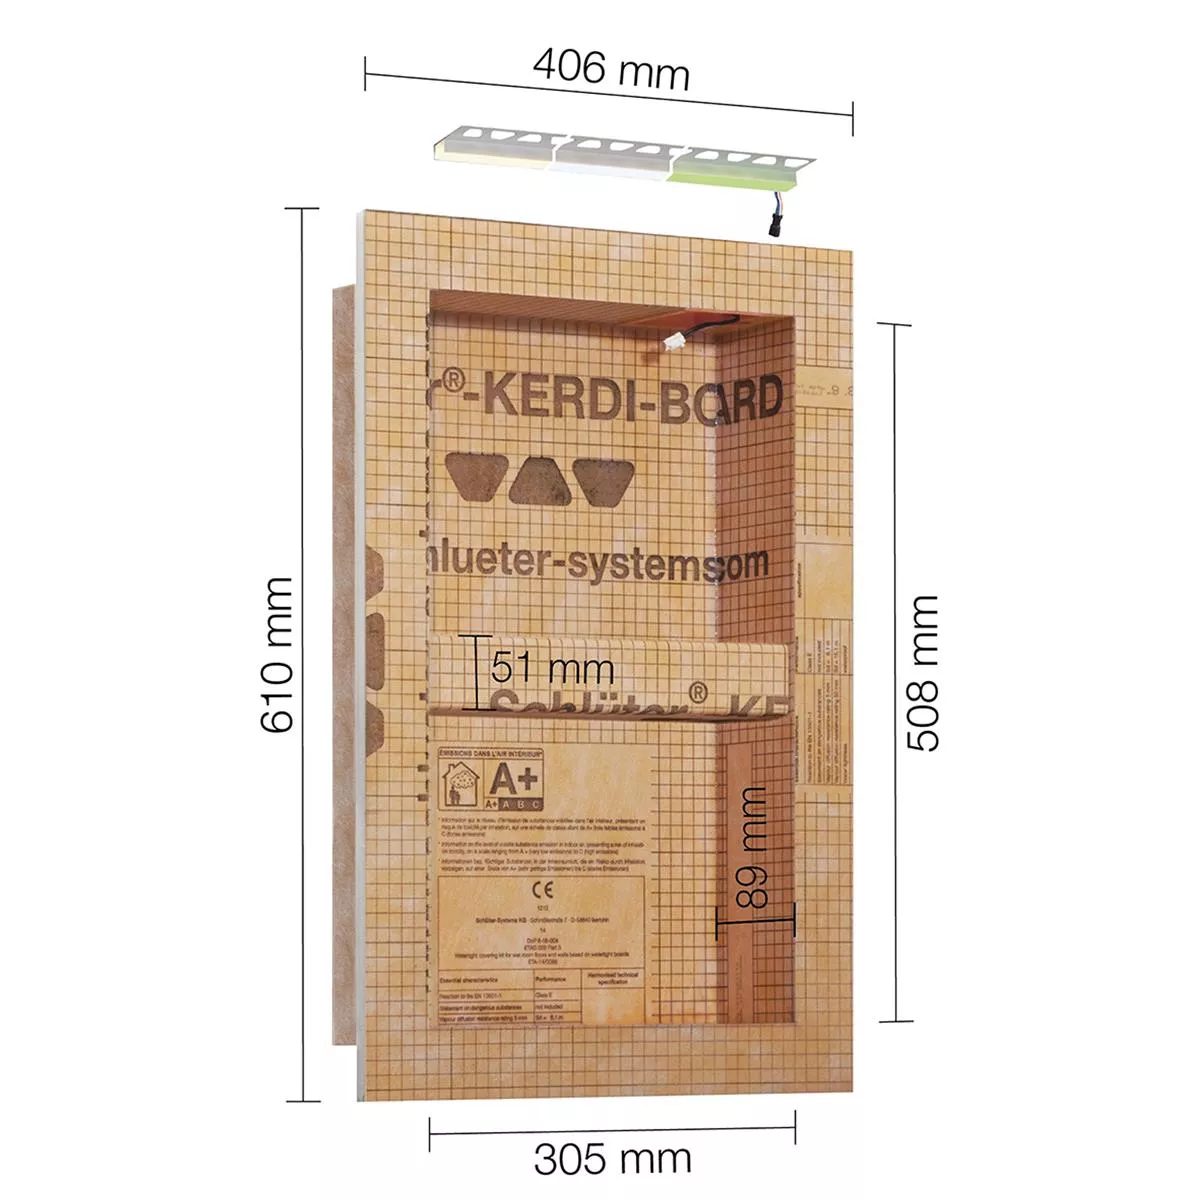 Schlüter Kerdi Board NLT niche set LED lighting RGB 30.5x50.8x0.89 cm